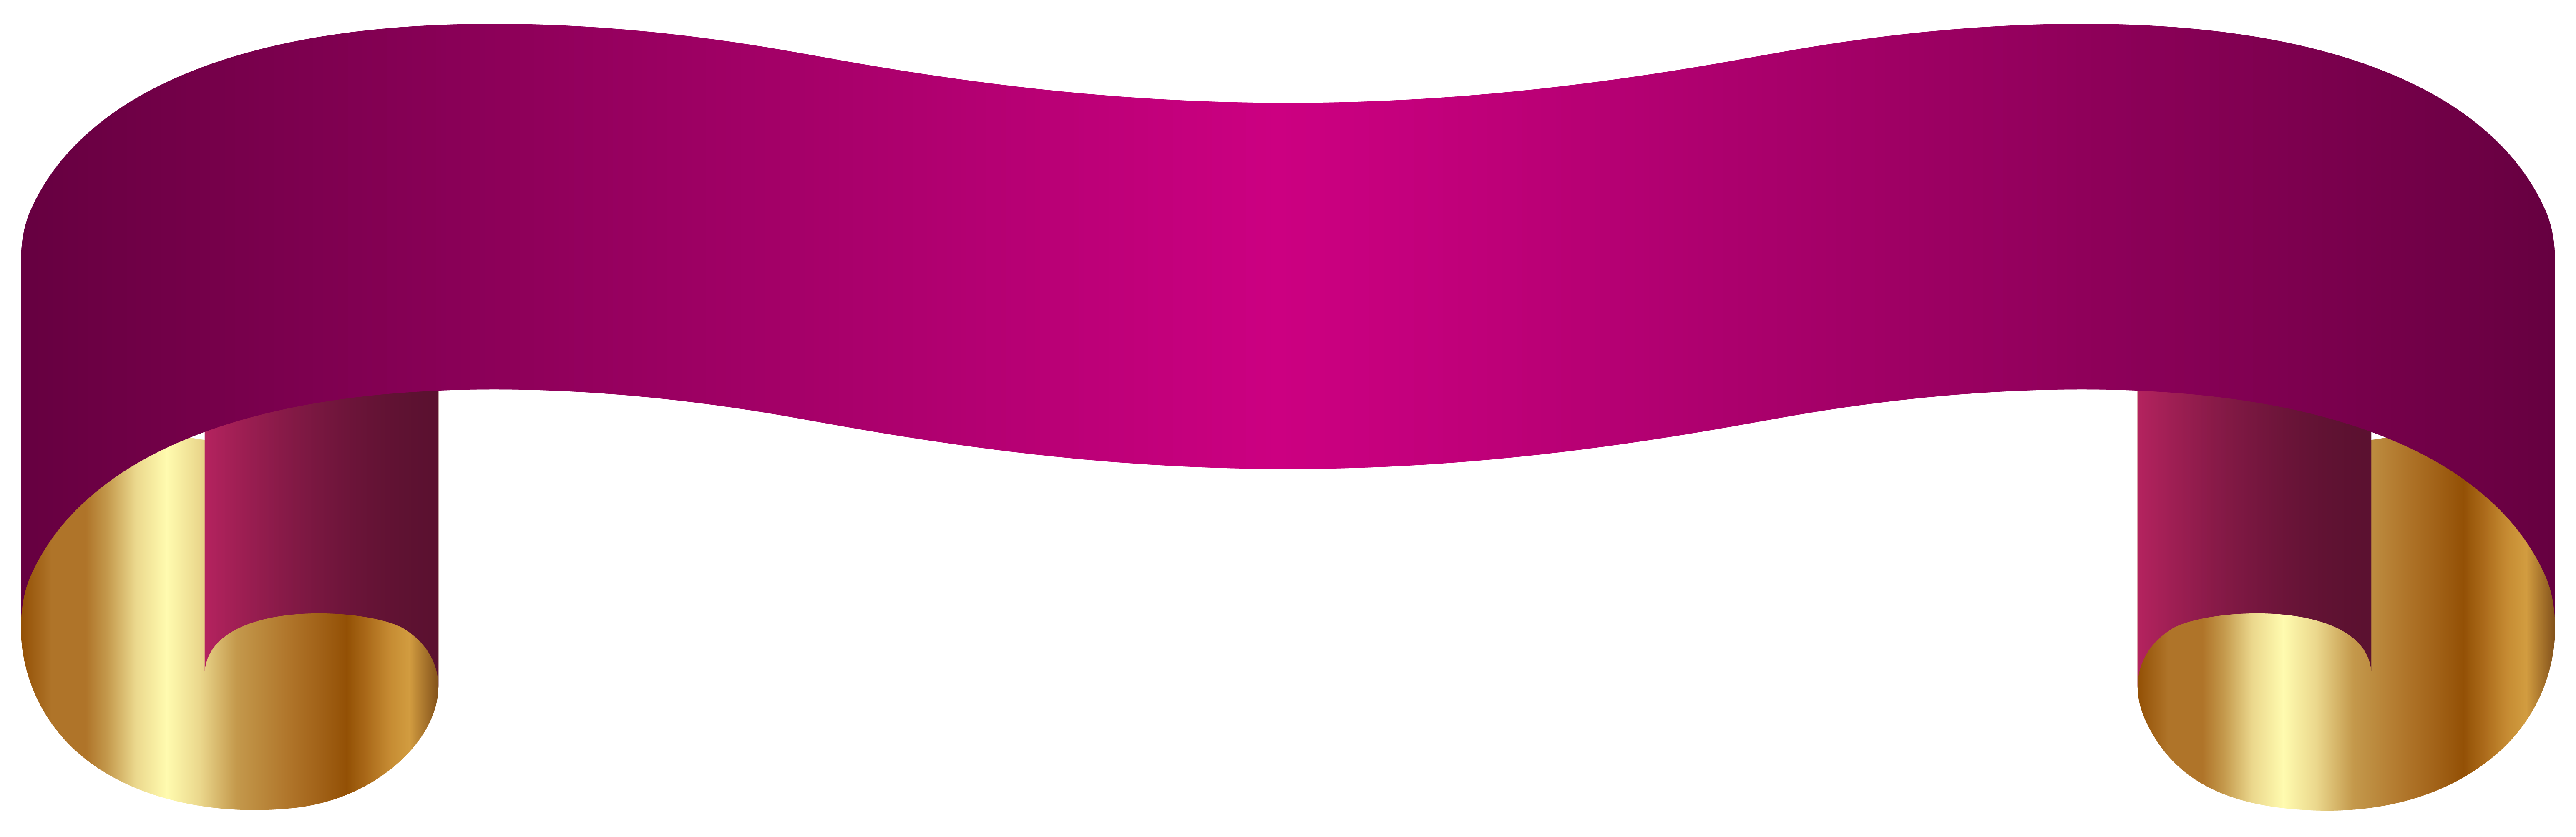 Bandeira violeta PNG Pic